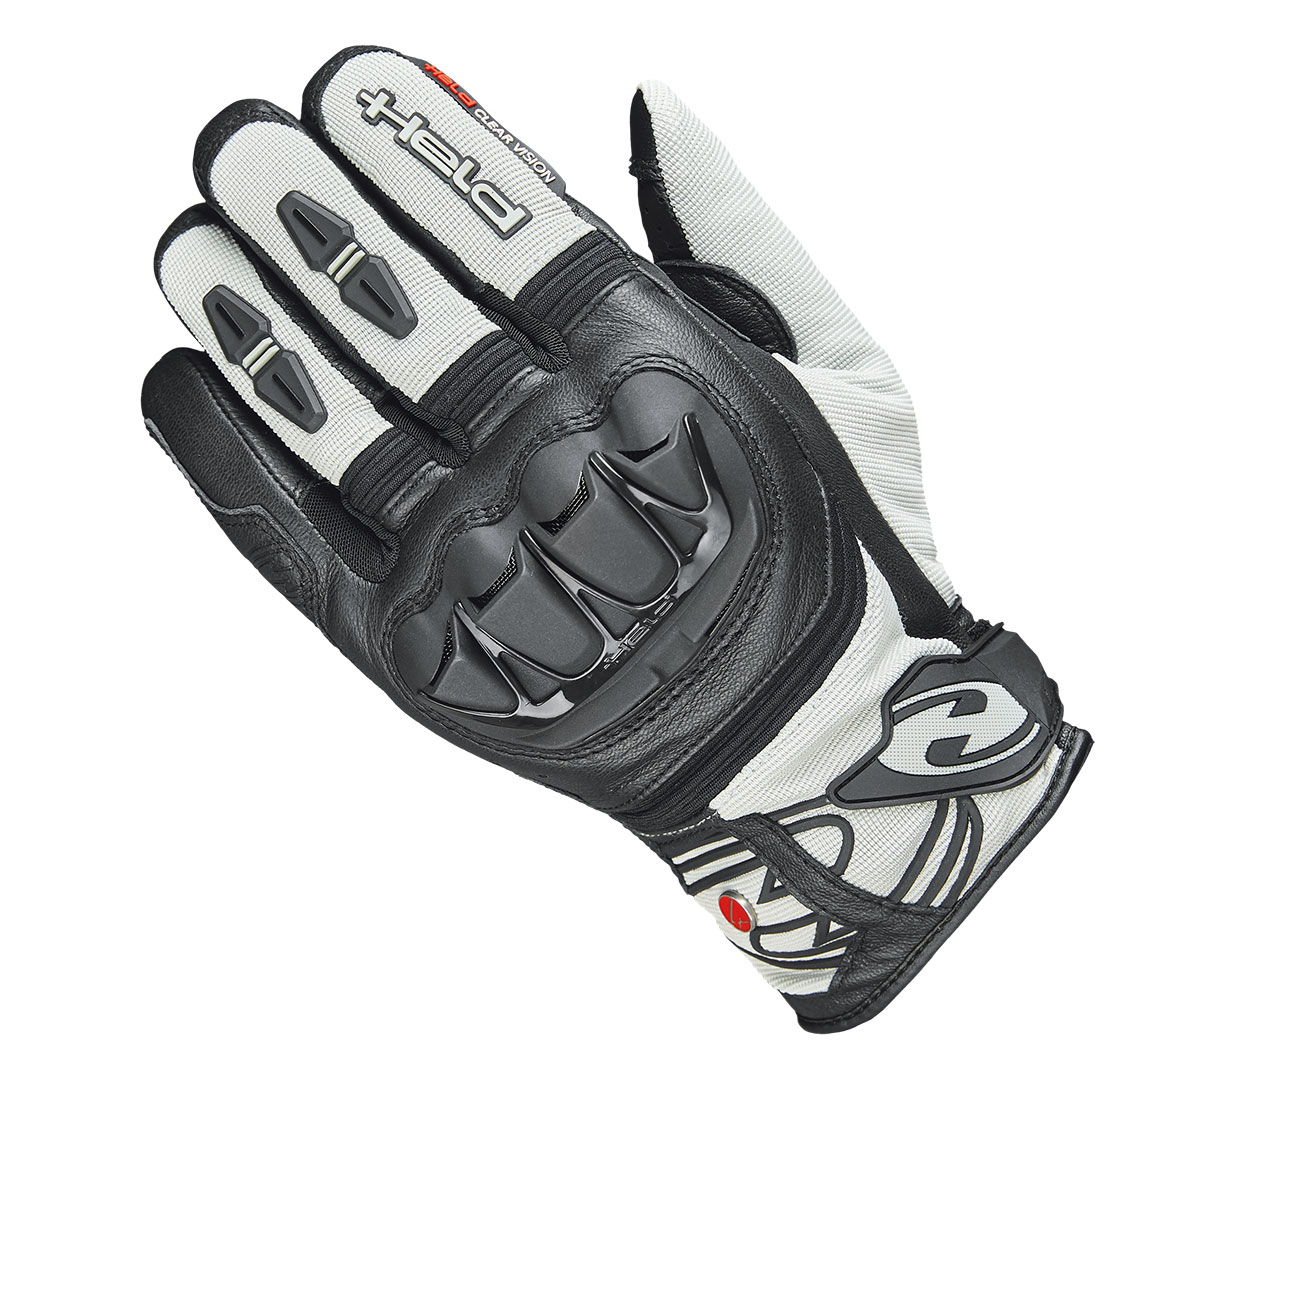 Sambia 2in1 Evo GORE-TEX® gloves